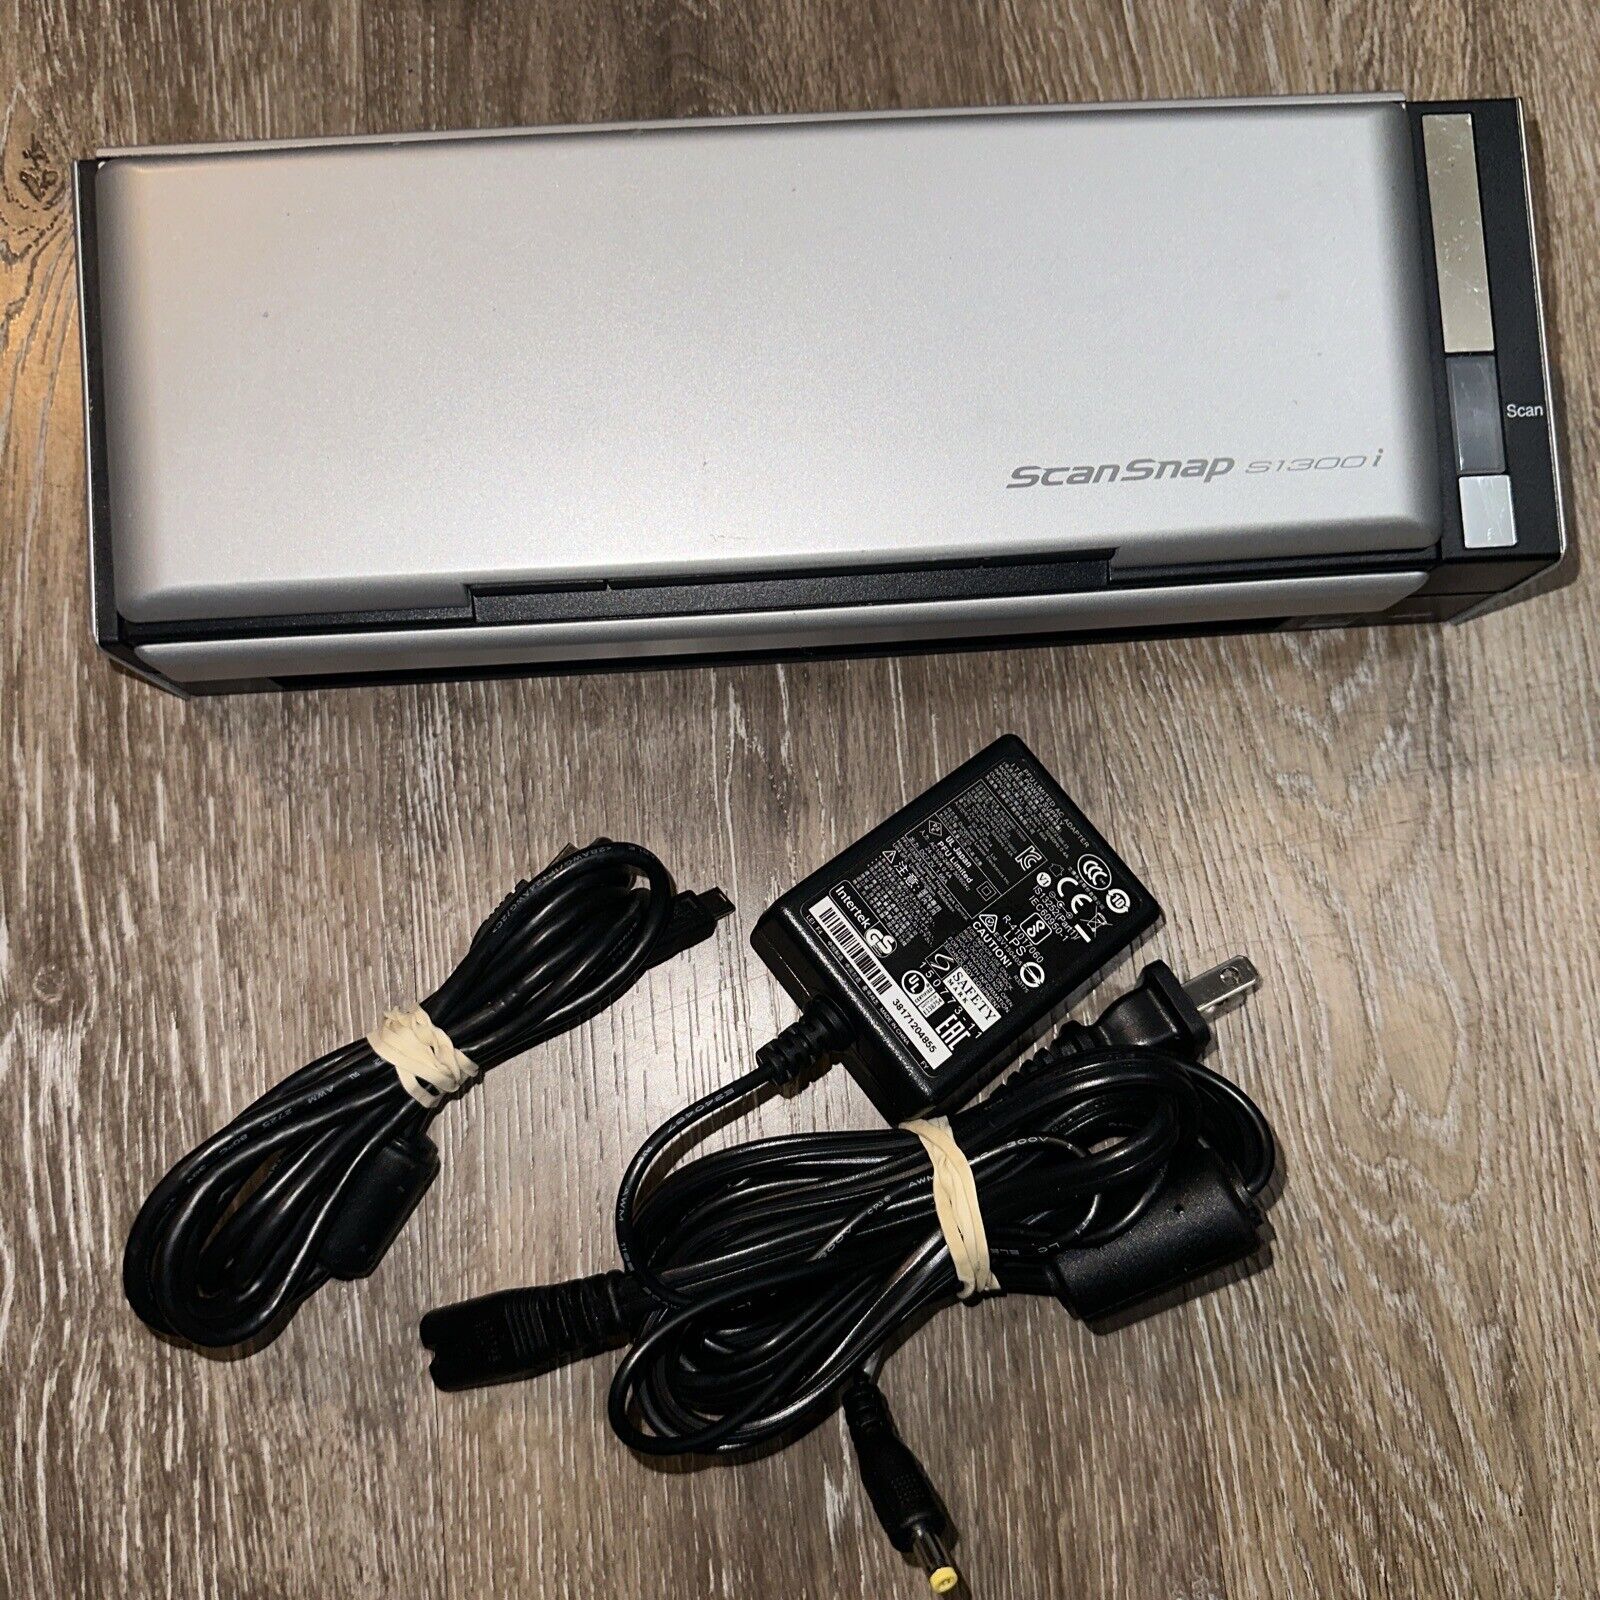 Fujitsu ScanSnap S1300i Duplex Portable Color Image Document Scanner